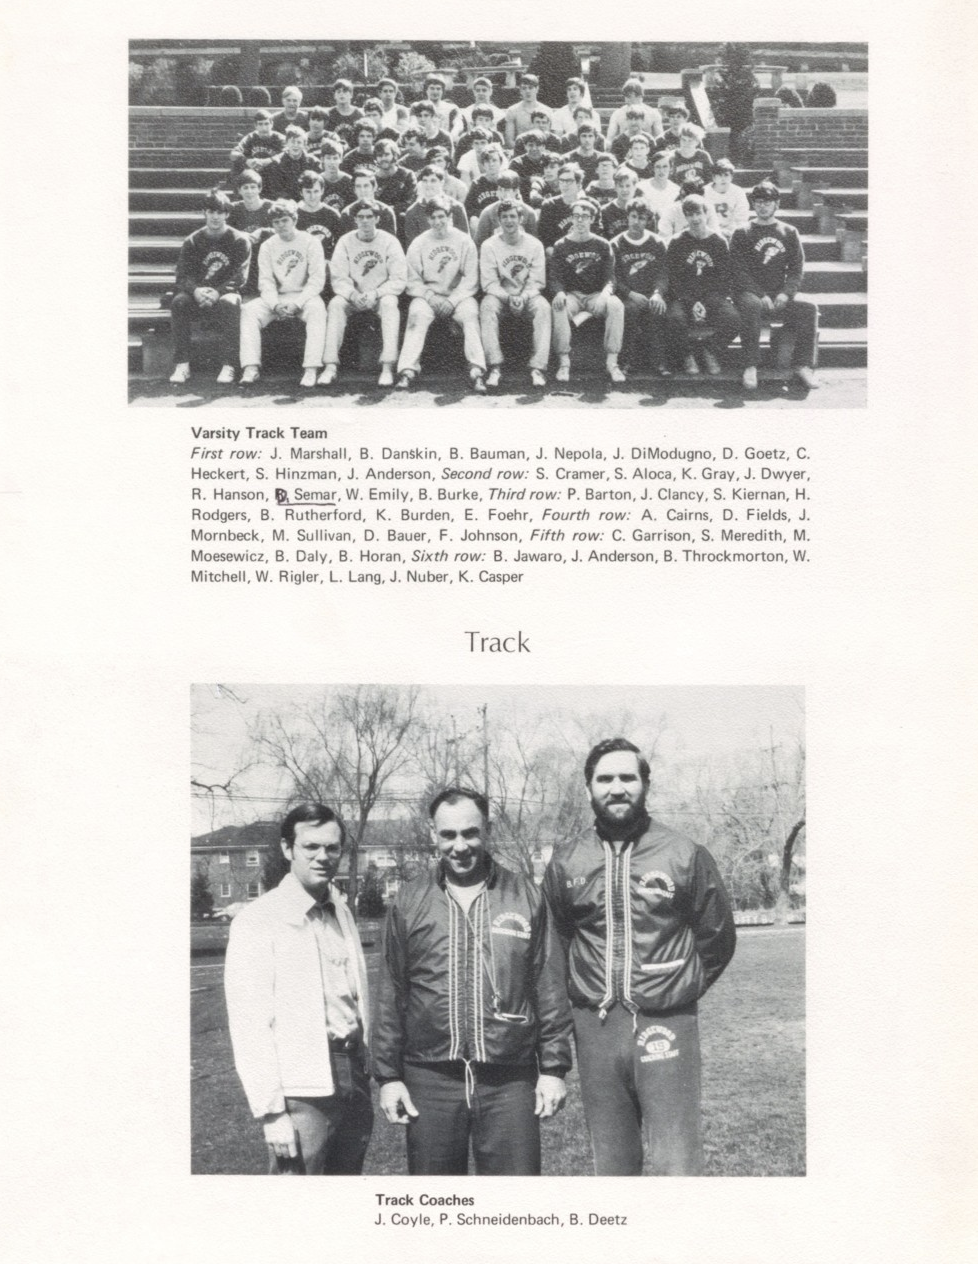 1970 Boys’ Track Team